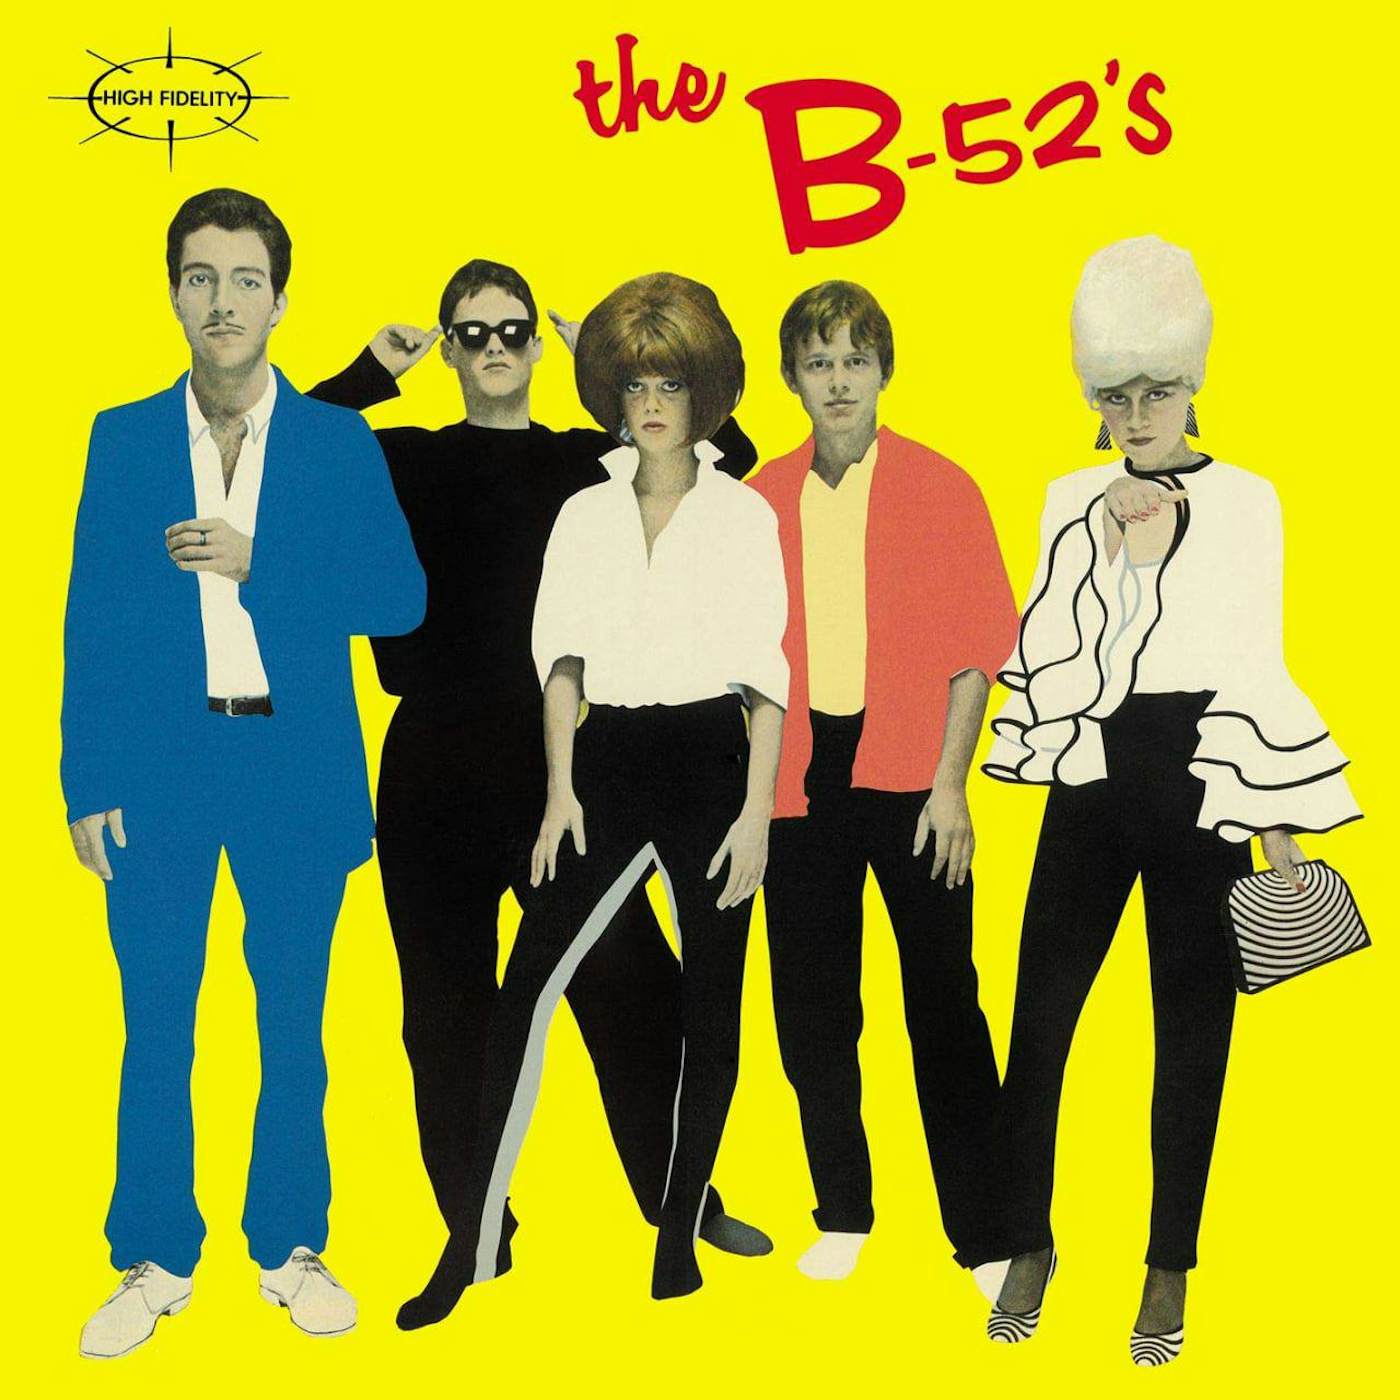  The B-52's Vinyl Record